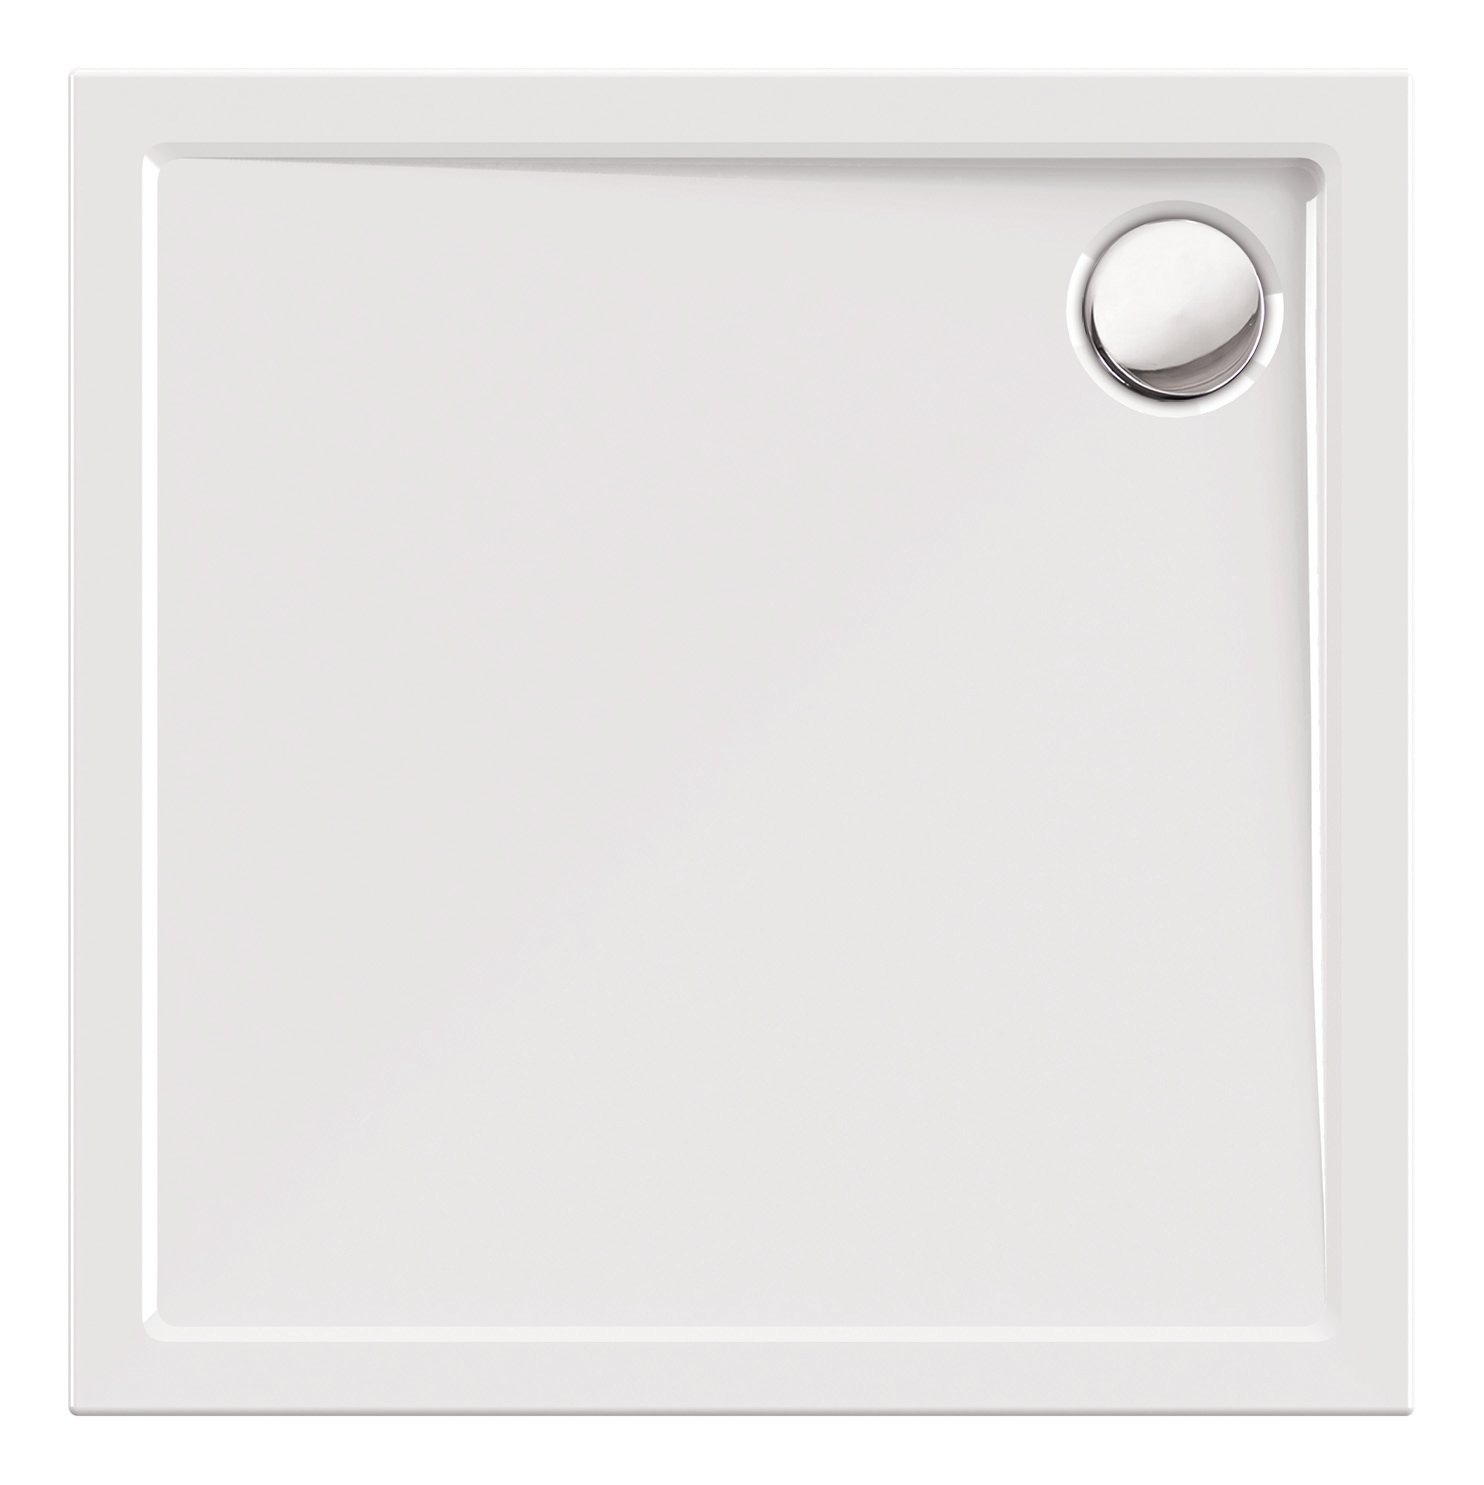 Quadrat-Brausewanne Modern Select aus Acryl, bodengleiche Duschwanne in Weiß, 90 x 90 x 2,5 cm